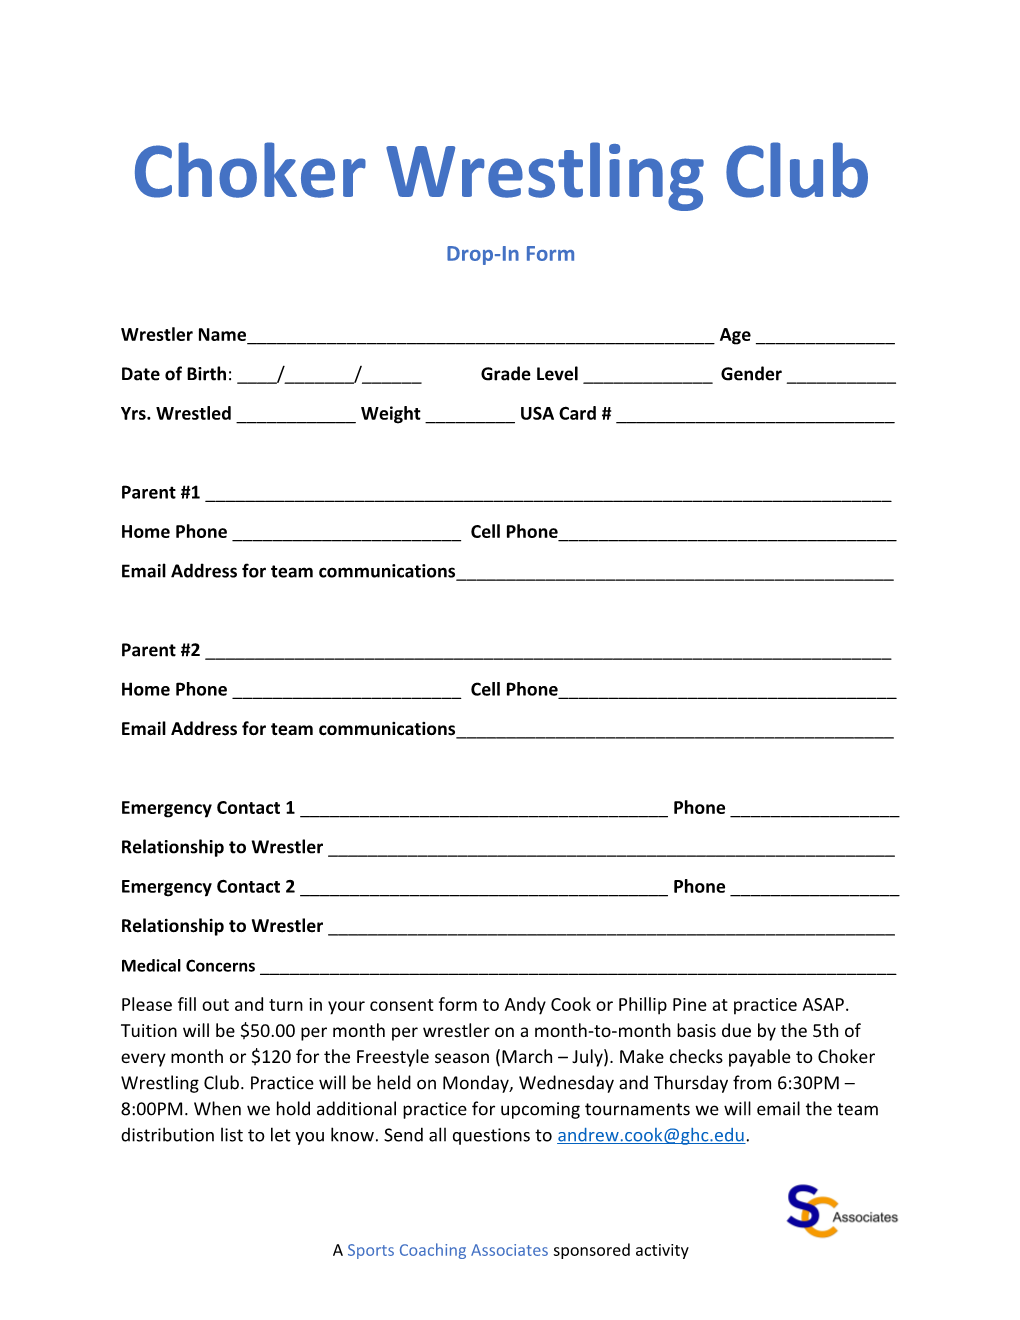 Choker Wrestling Club